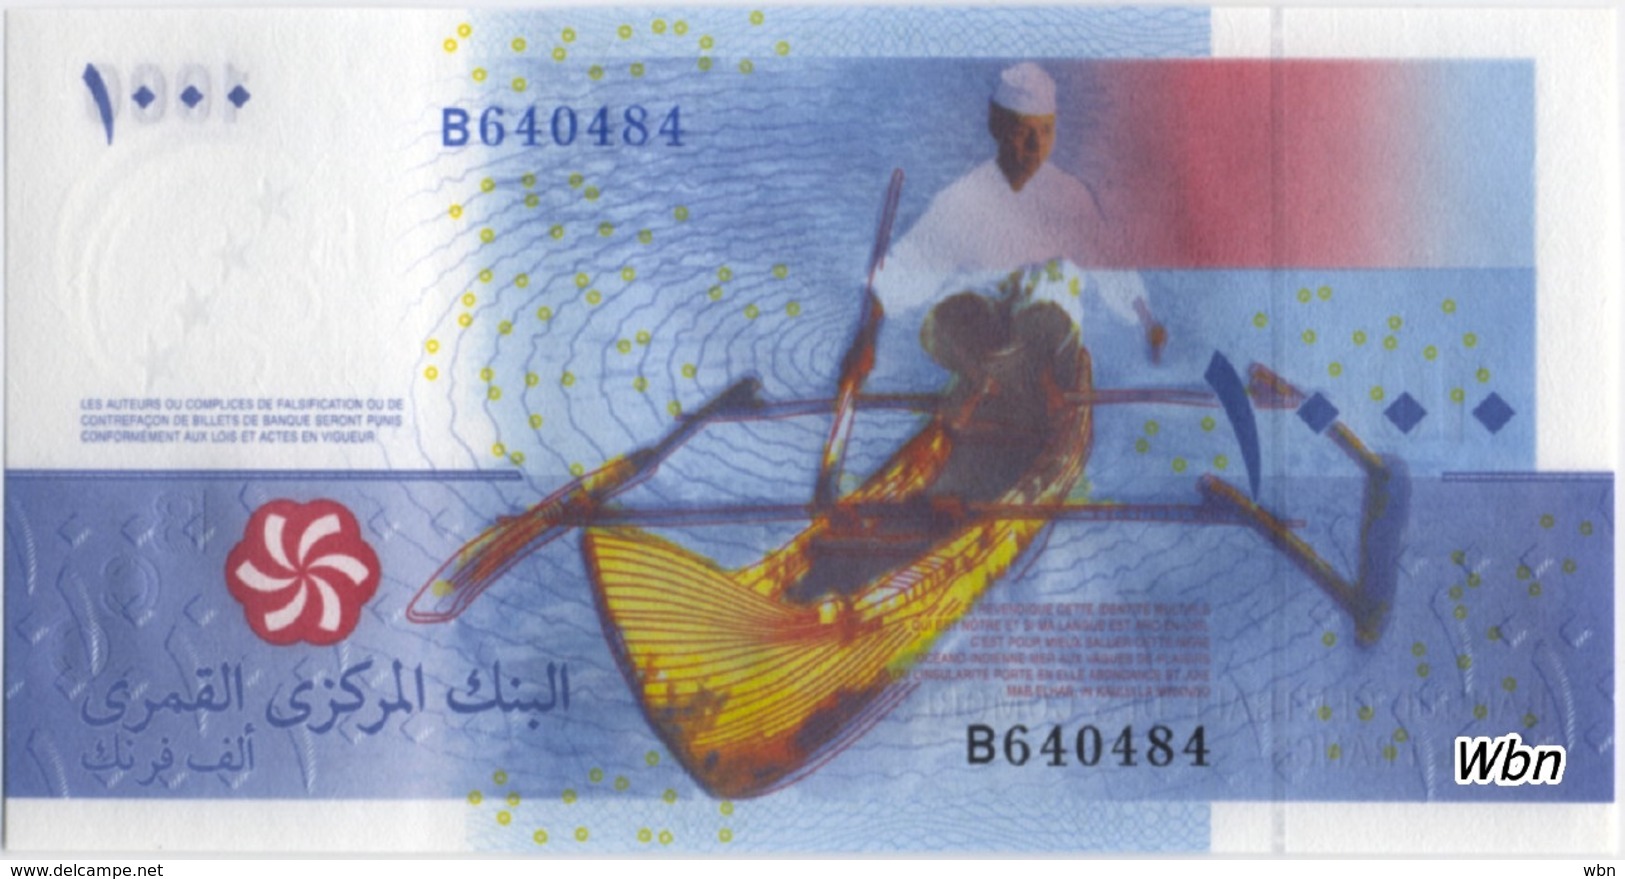 Comores 1000 Francs (P16) 2005 -UNC- - Comores